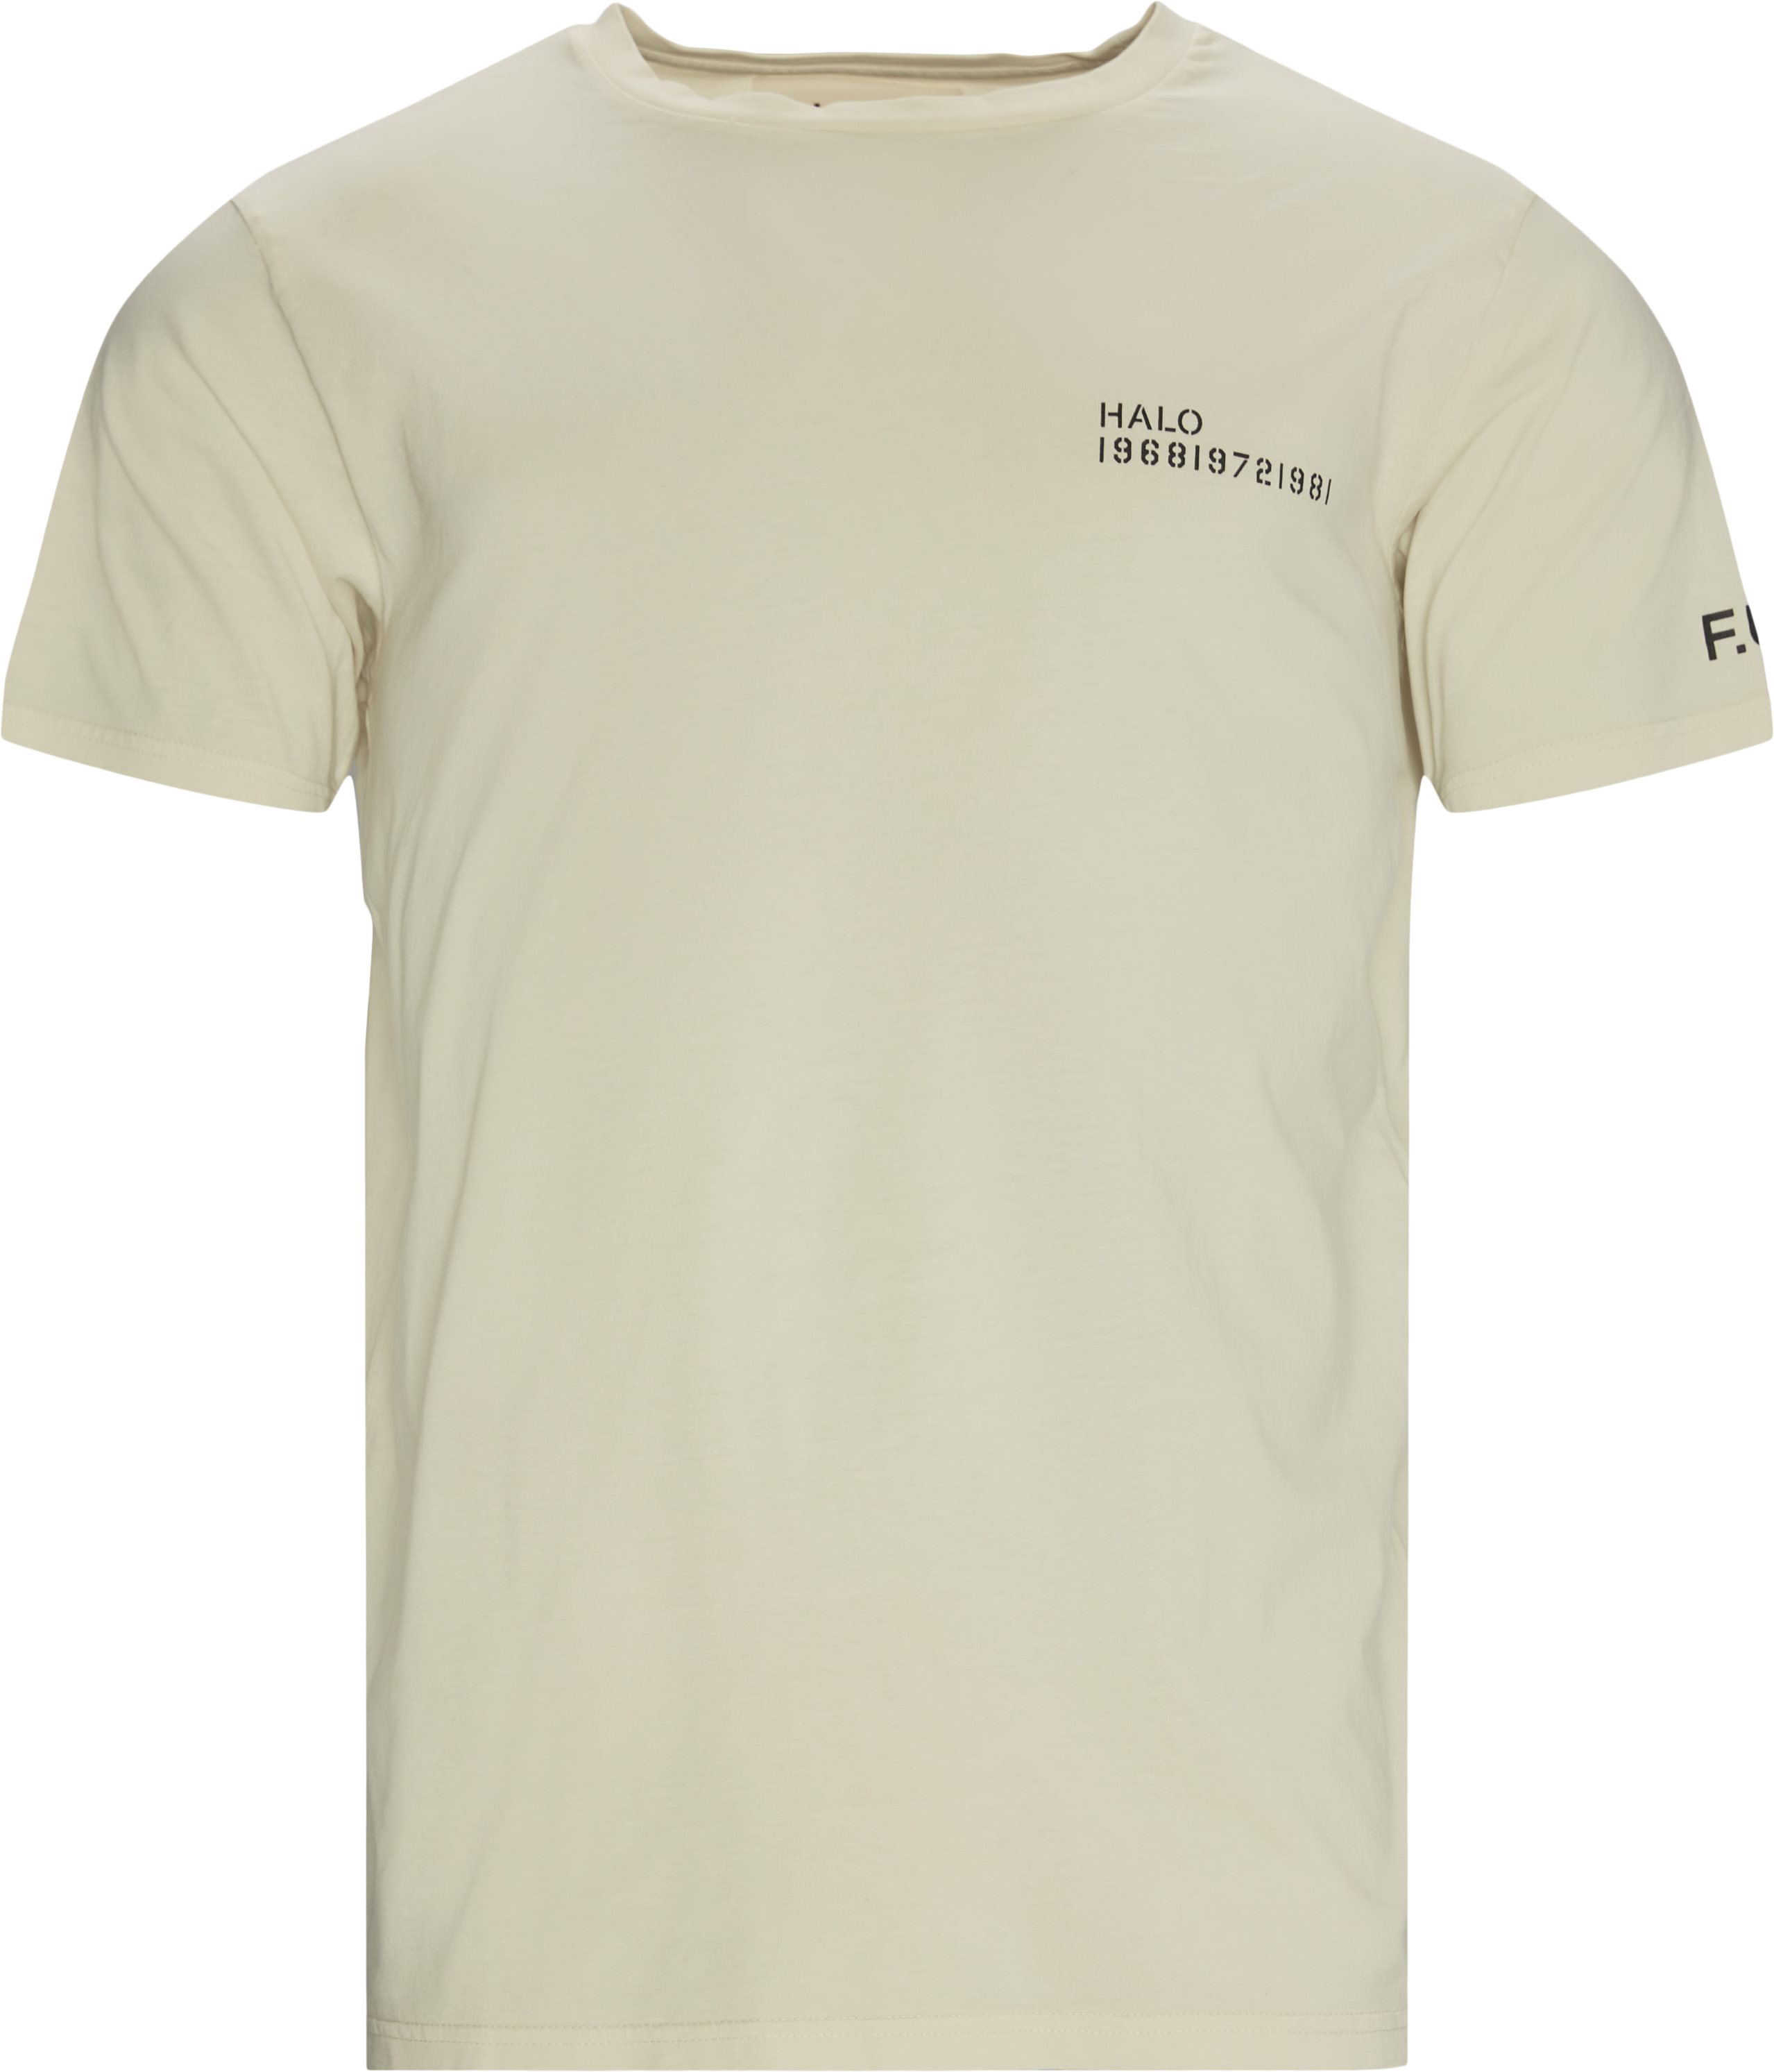 Cotton Tee  - T-shirts - Regular fit - Sand